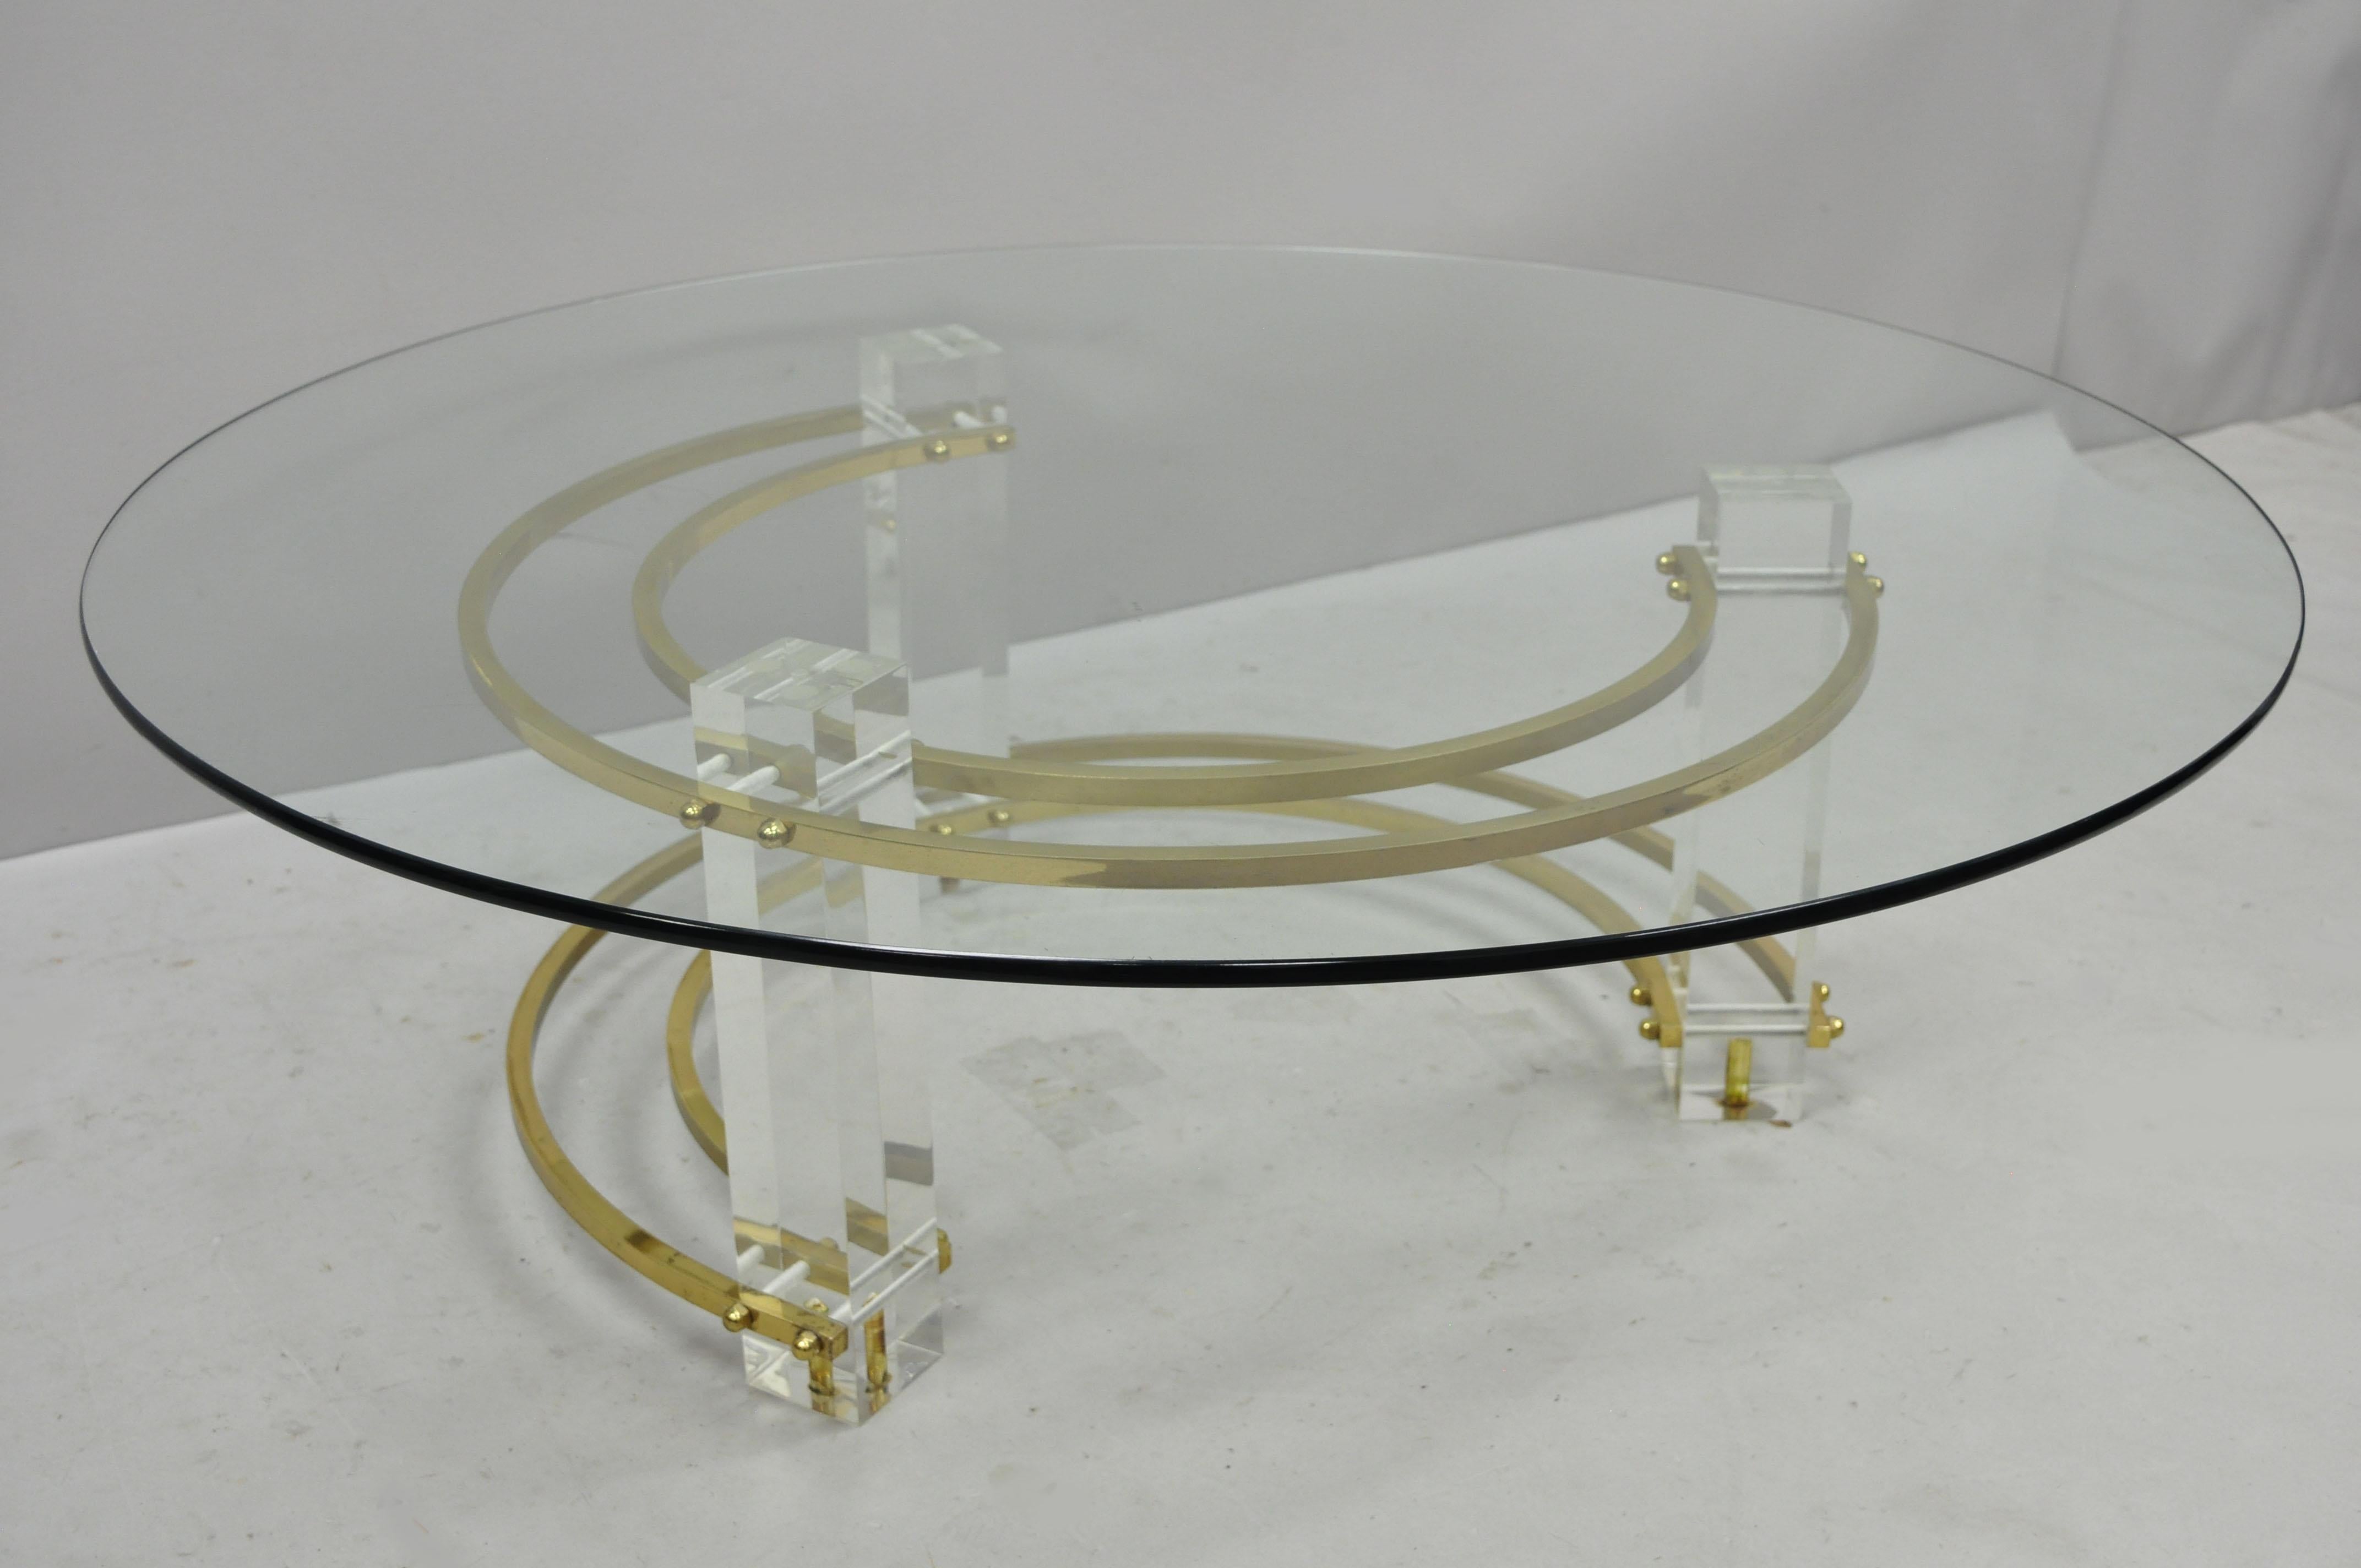 Mid-Century Modern brass Lucite round glass Charles Hollis Jones coffee table. Item features three Lucite column-form legs, brass supports, round glass top, sleek sculptural form, circa mid-20th century. Measurements: 13.5